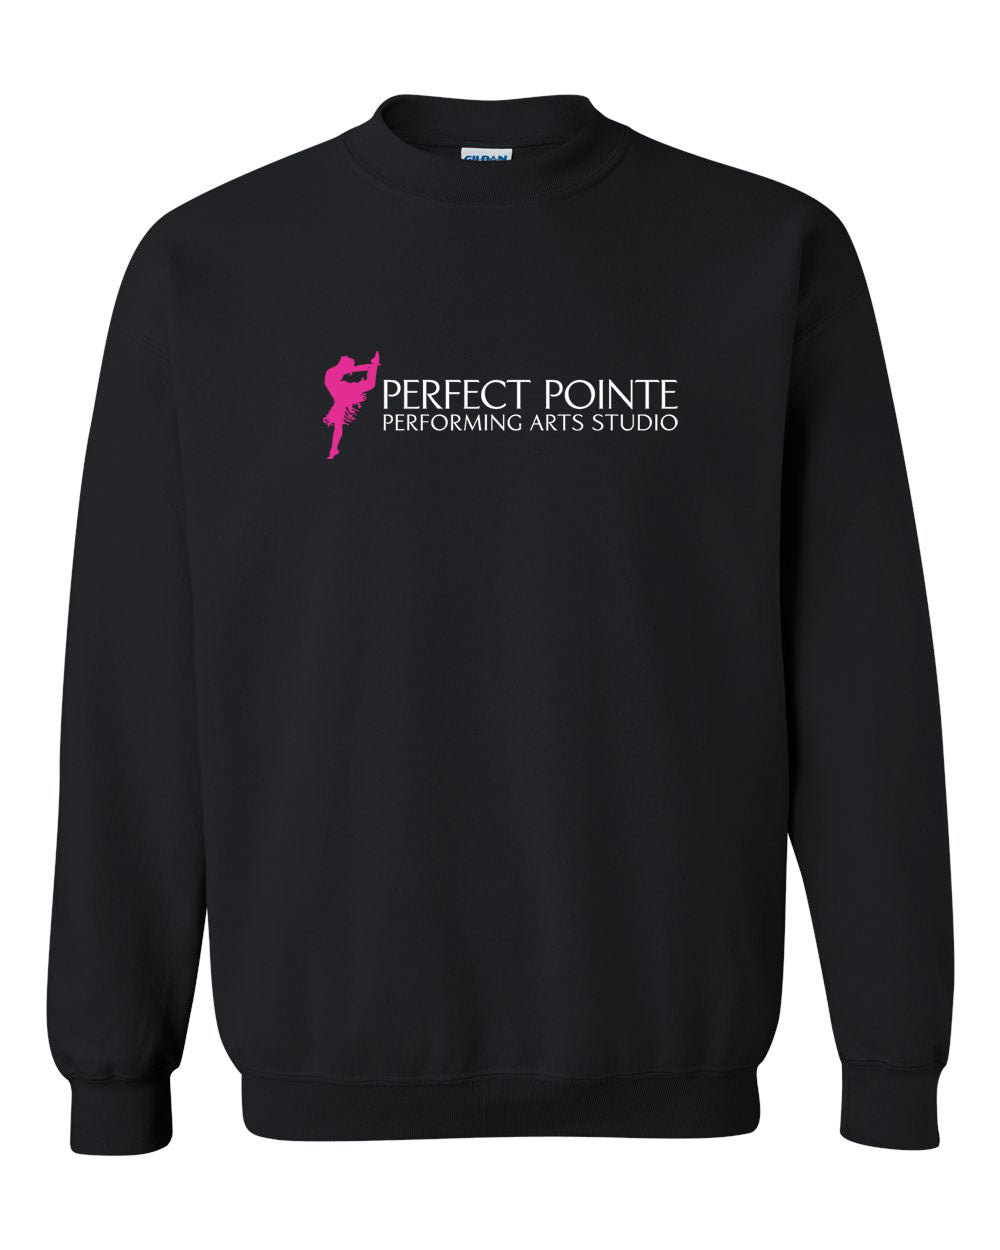 Perfect Pointe Design 1 non hooded sweatshirt